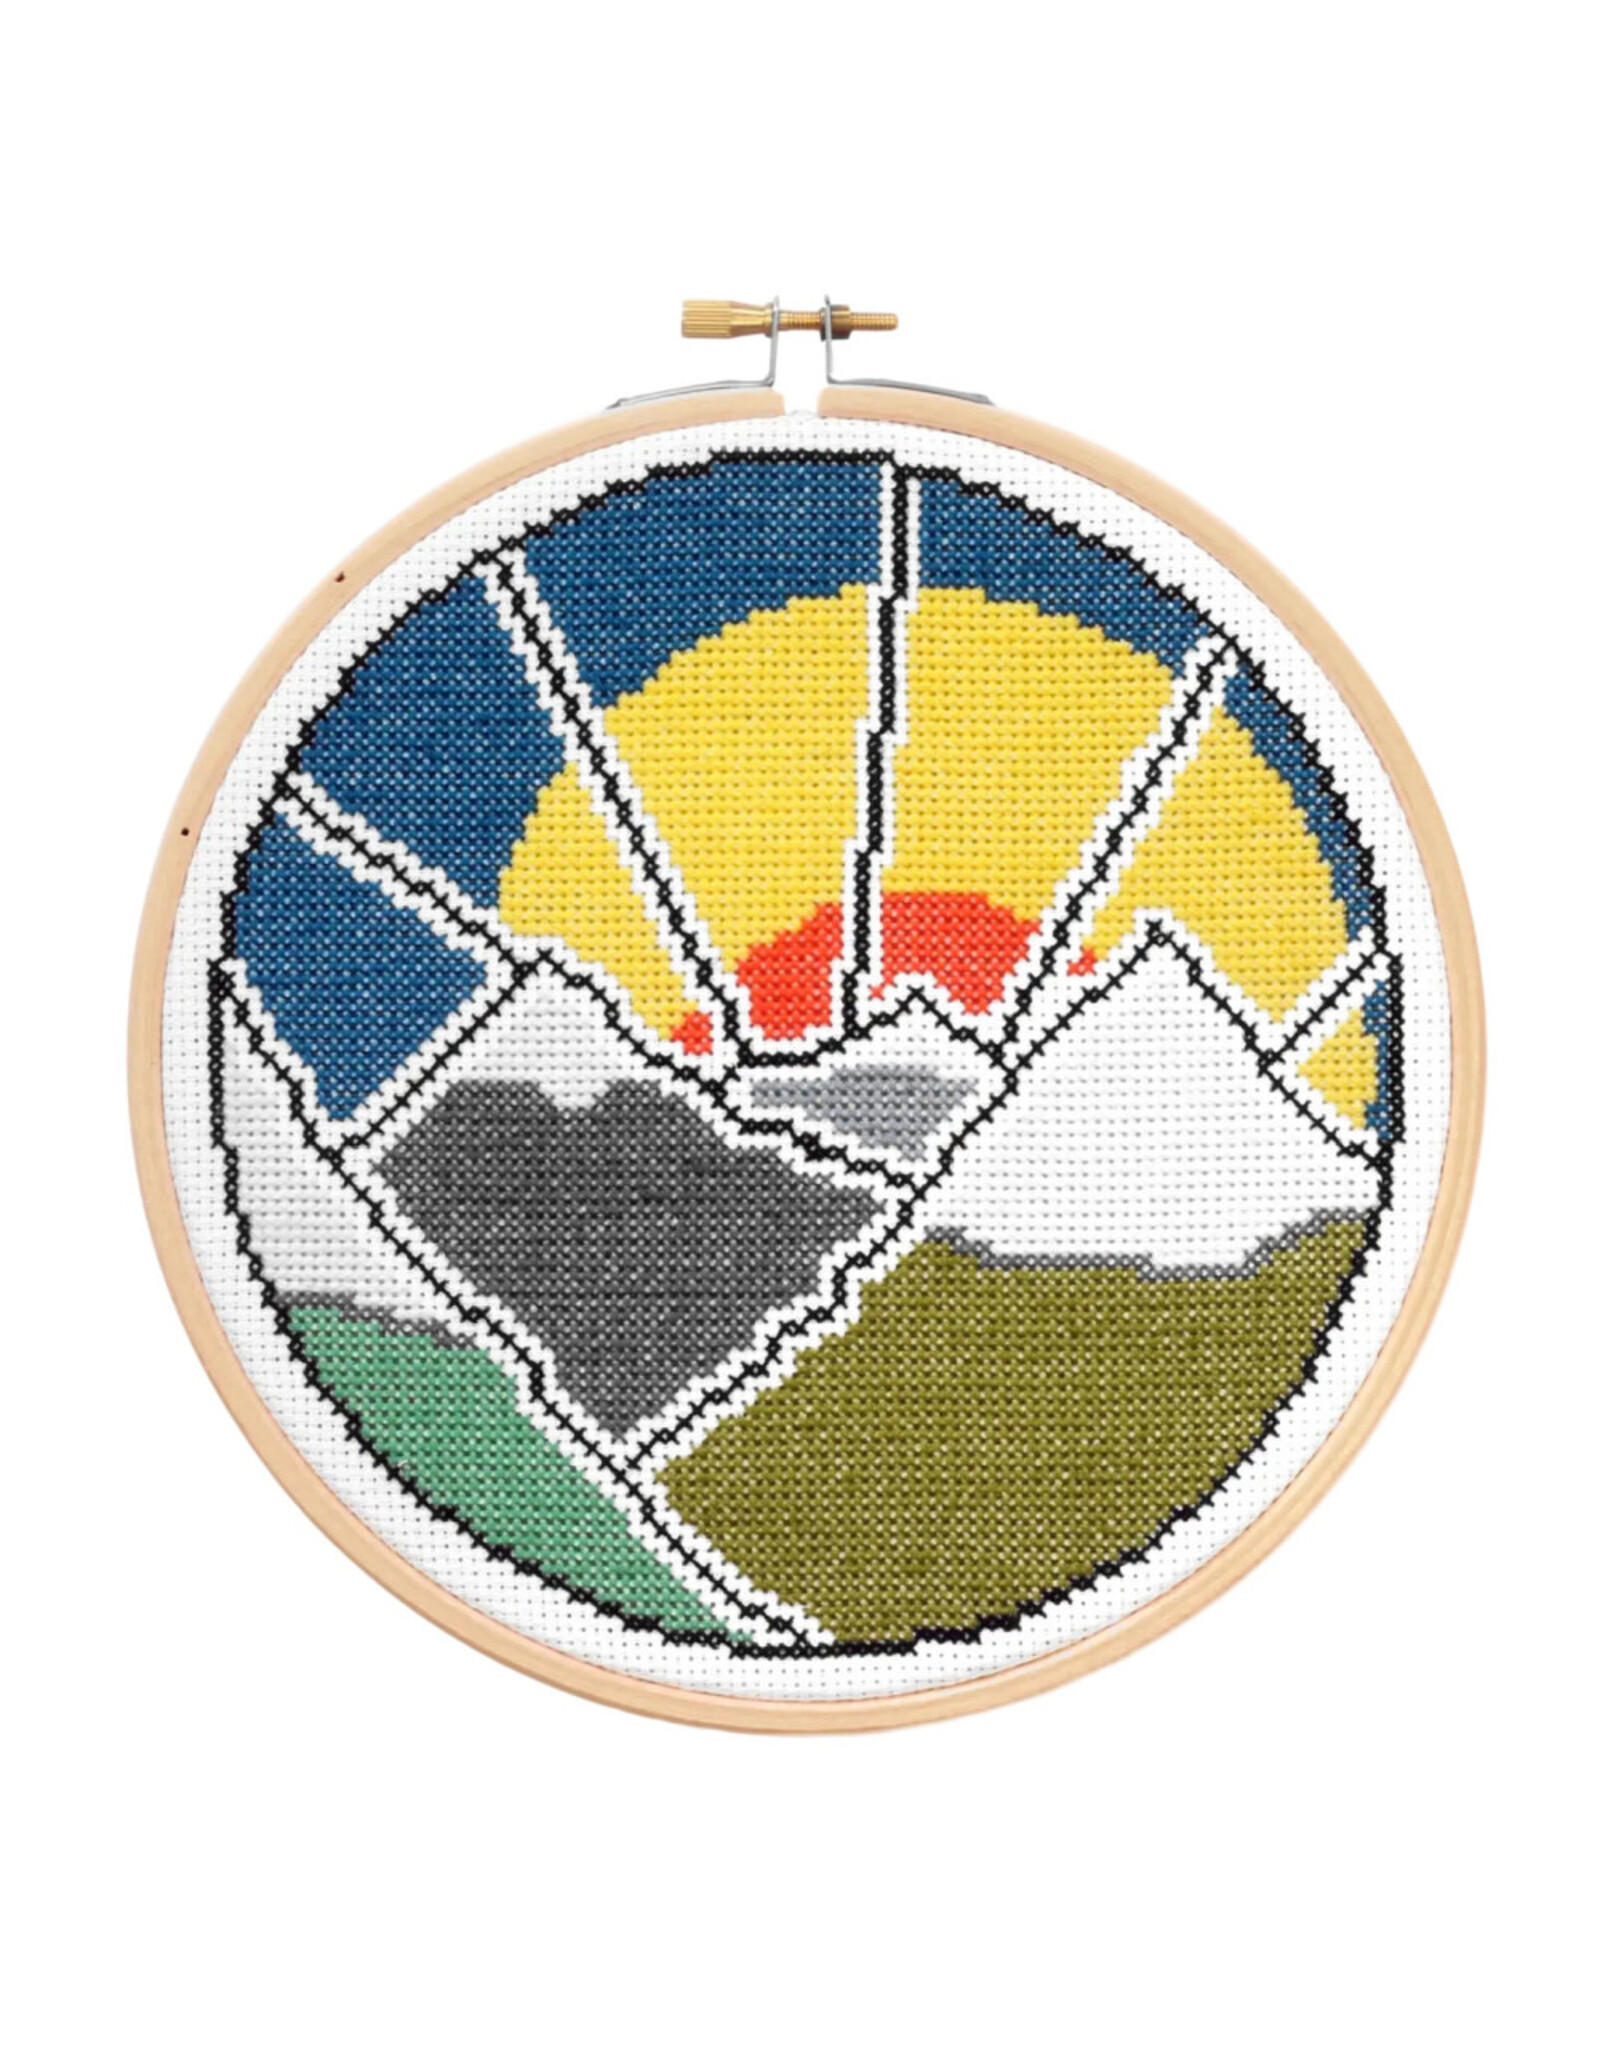 Hawthorne Handmade Mountain Adventure Cross Stitch Kit